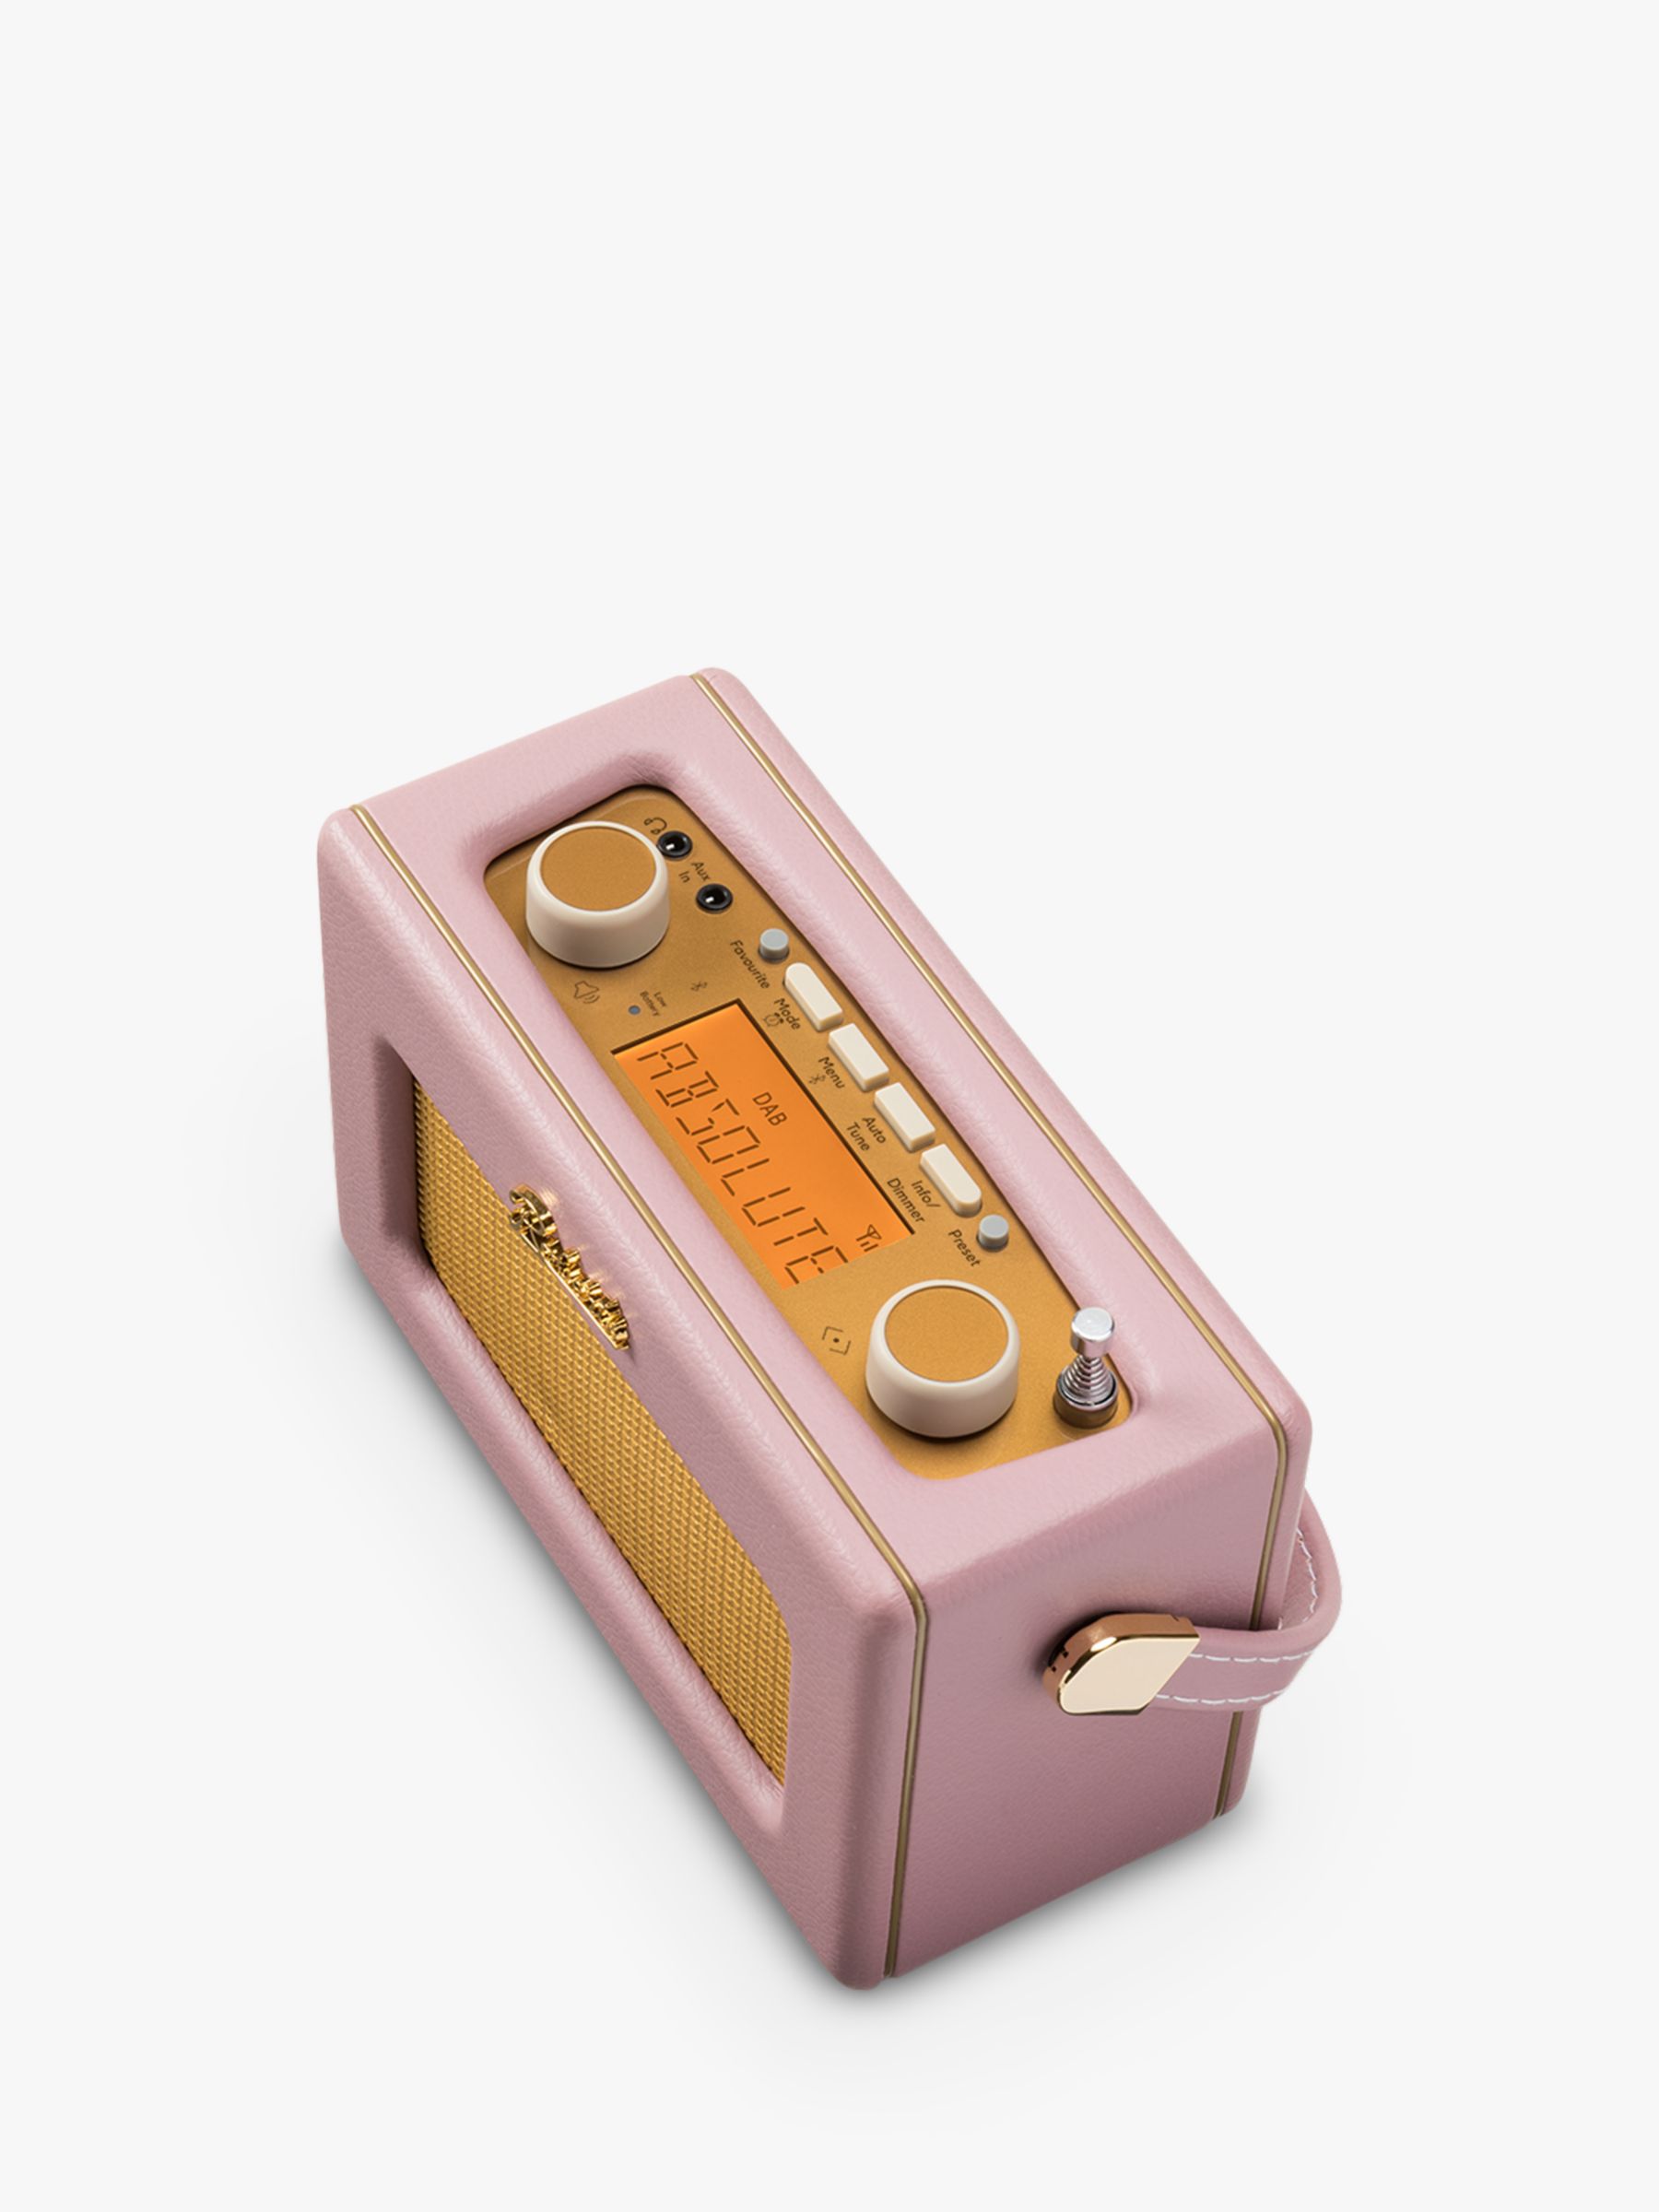 Roberts Revival Uno with BT Alarm, DAB/DAB+/FM Bluetooth Pastel Cream Digital Radio